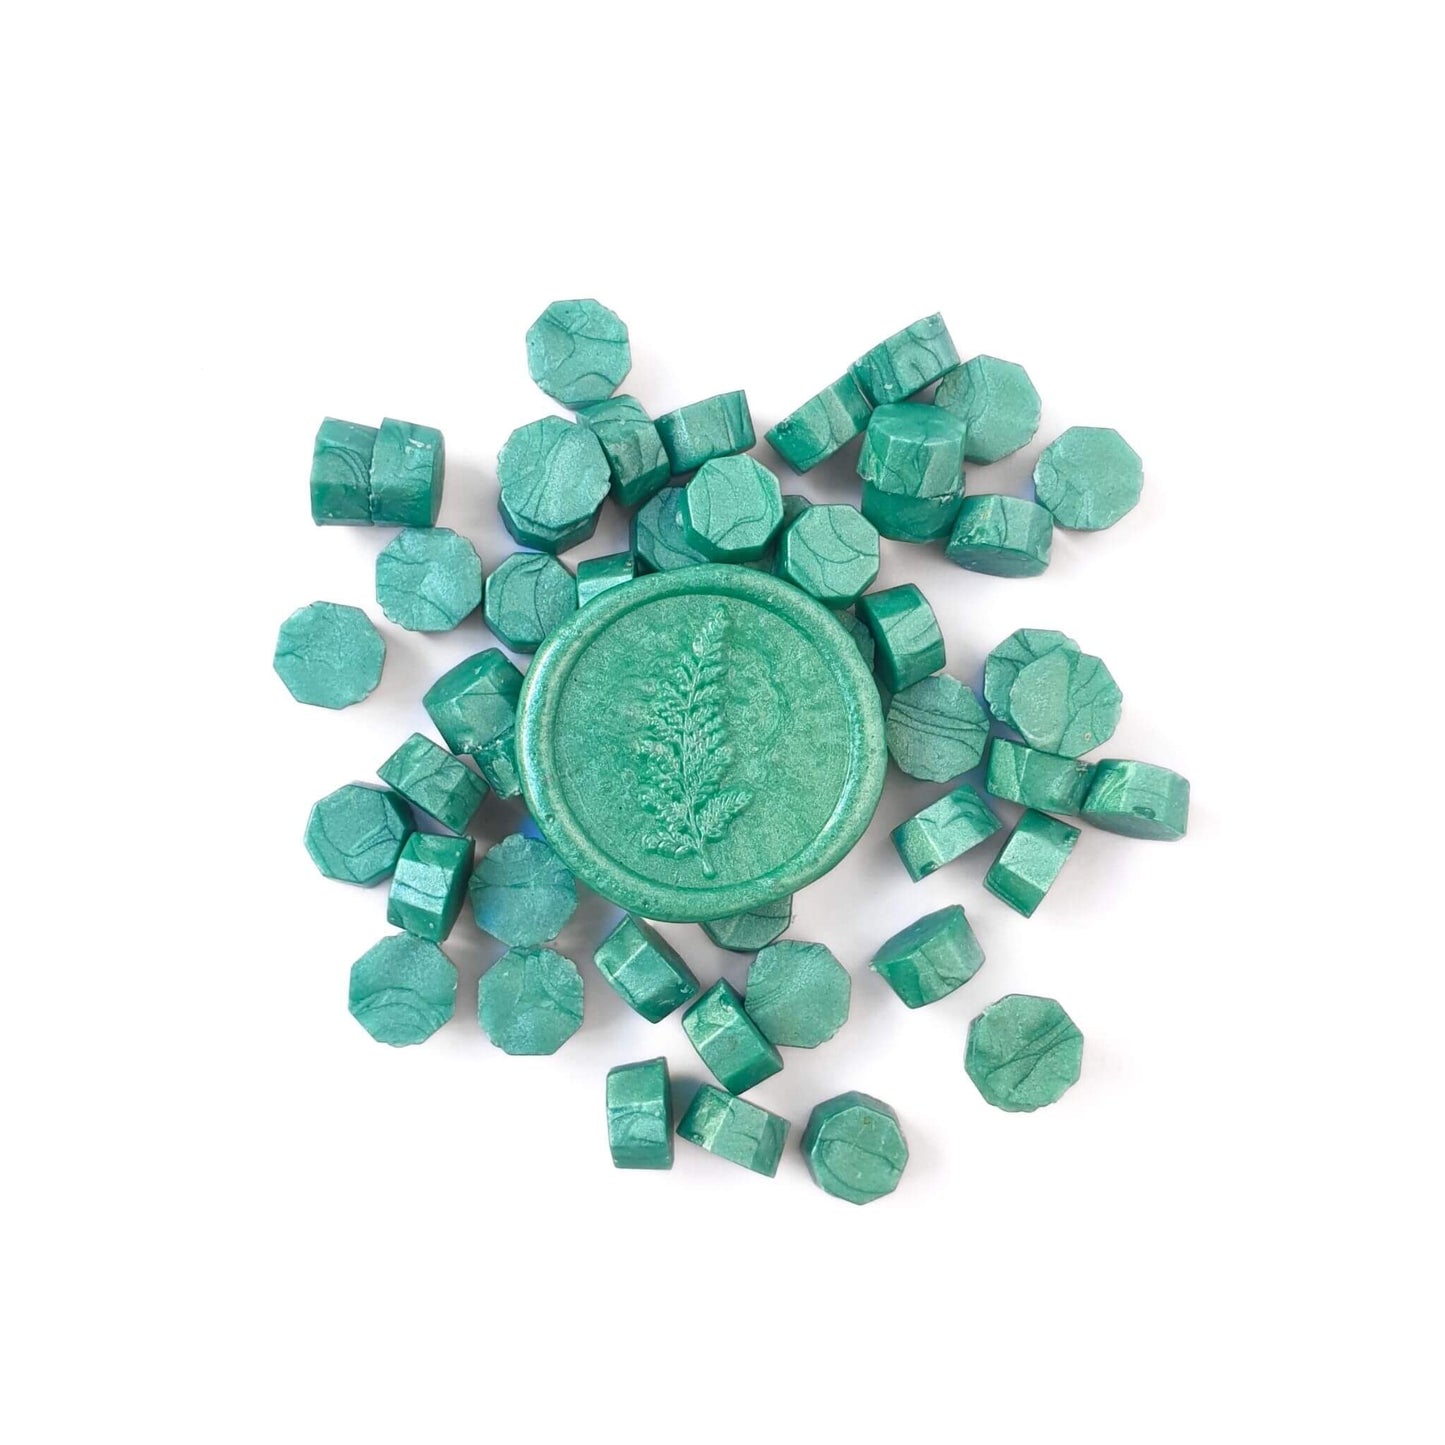 Jade sealing wax beads with green wax seal with fern motif